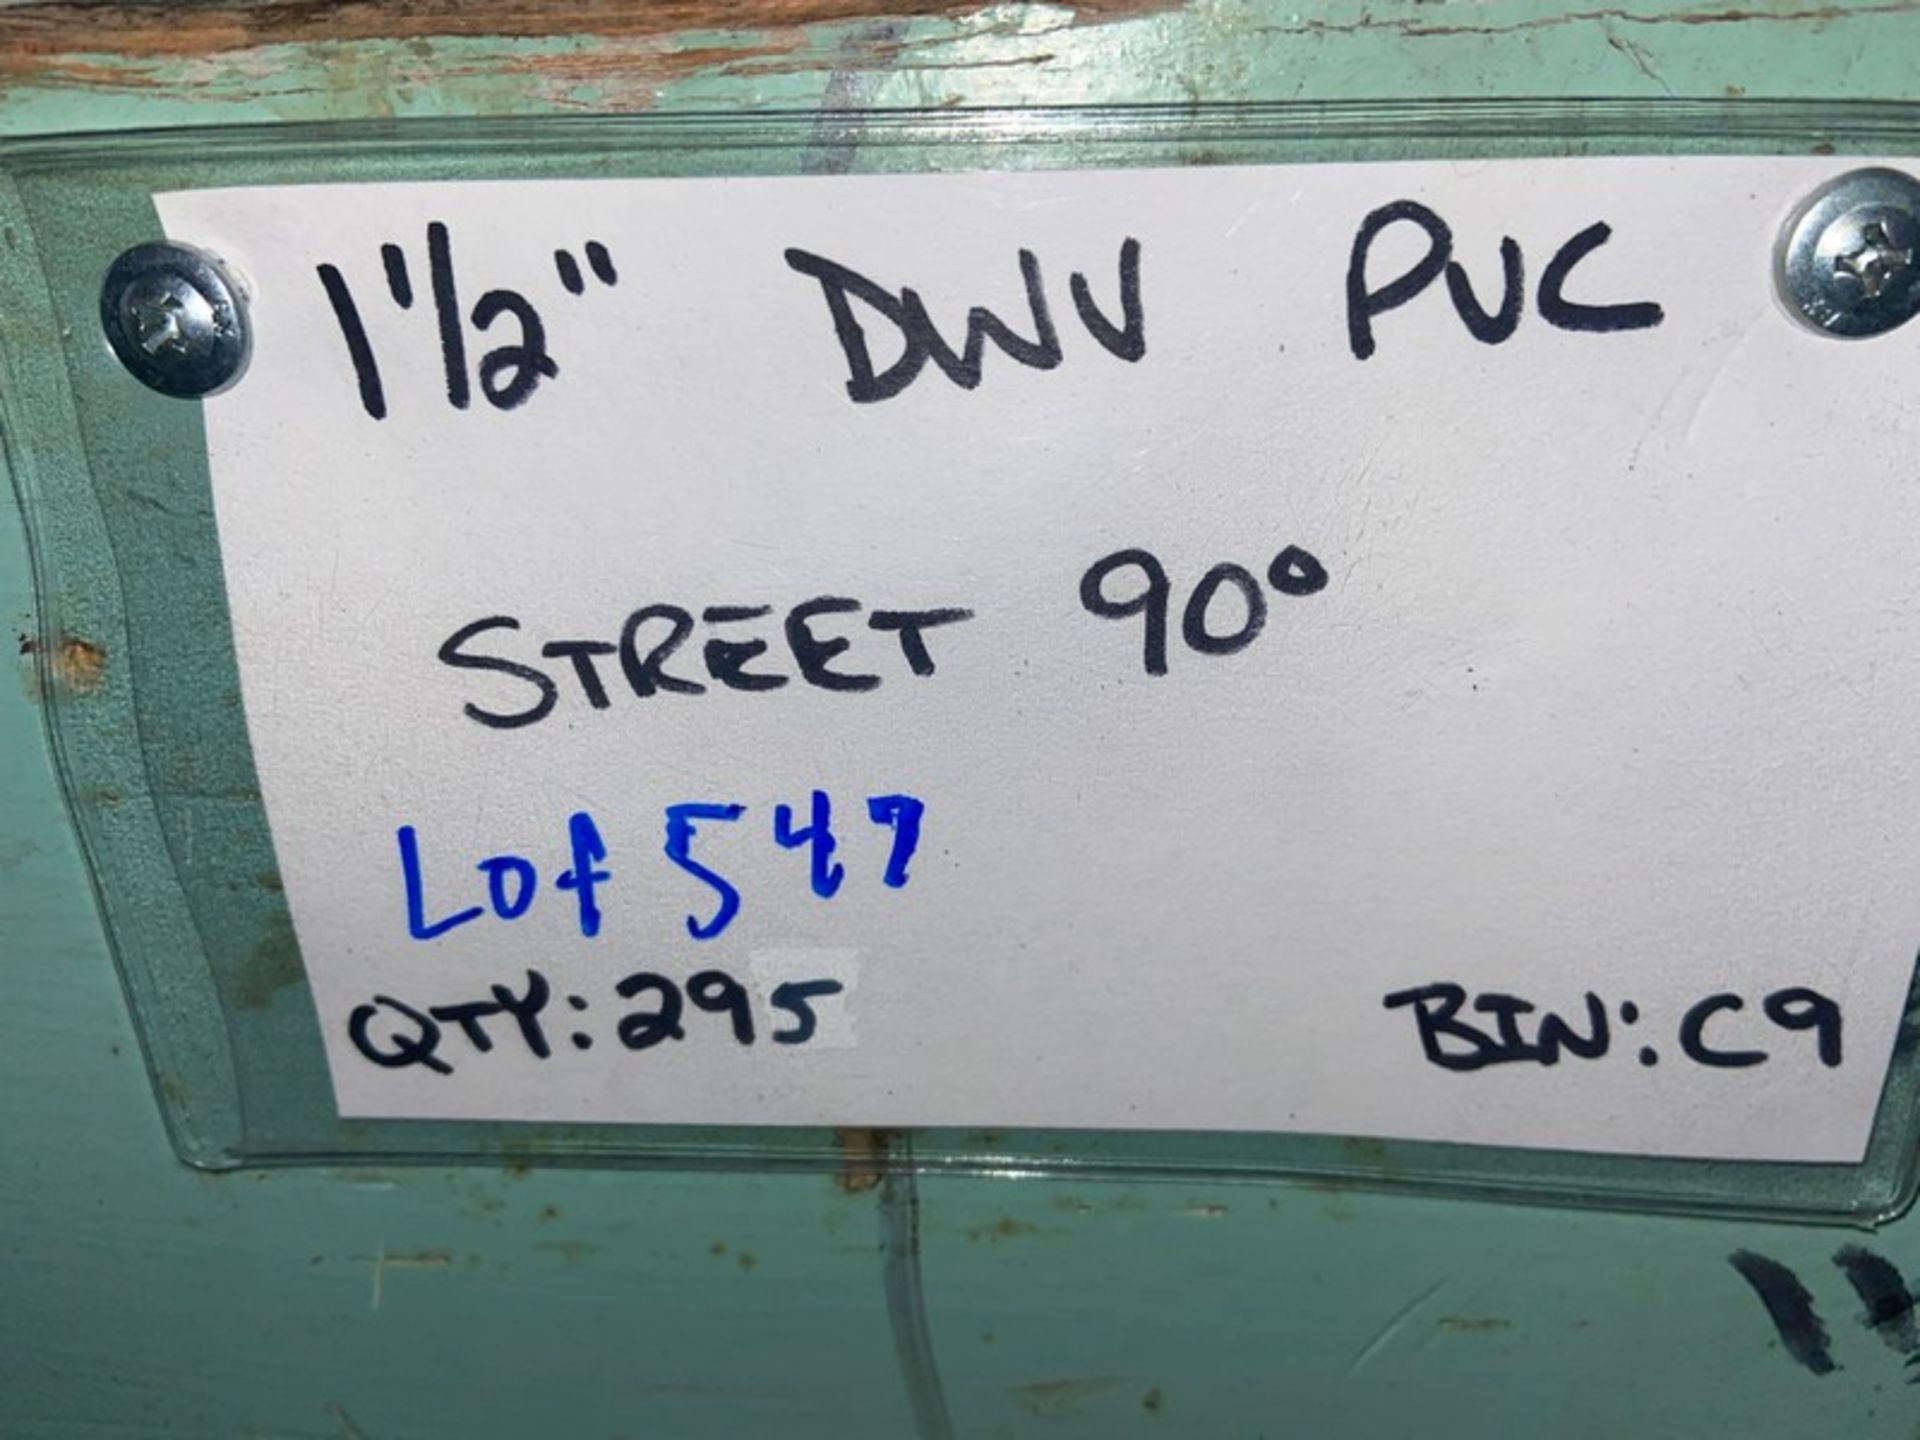 (297) DWV PVC STREET 90’ (Bin:C9) (LOCATED IN MONROEVILLE, PA) - Image 5 of 5